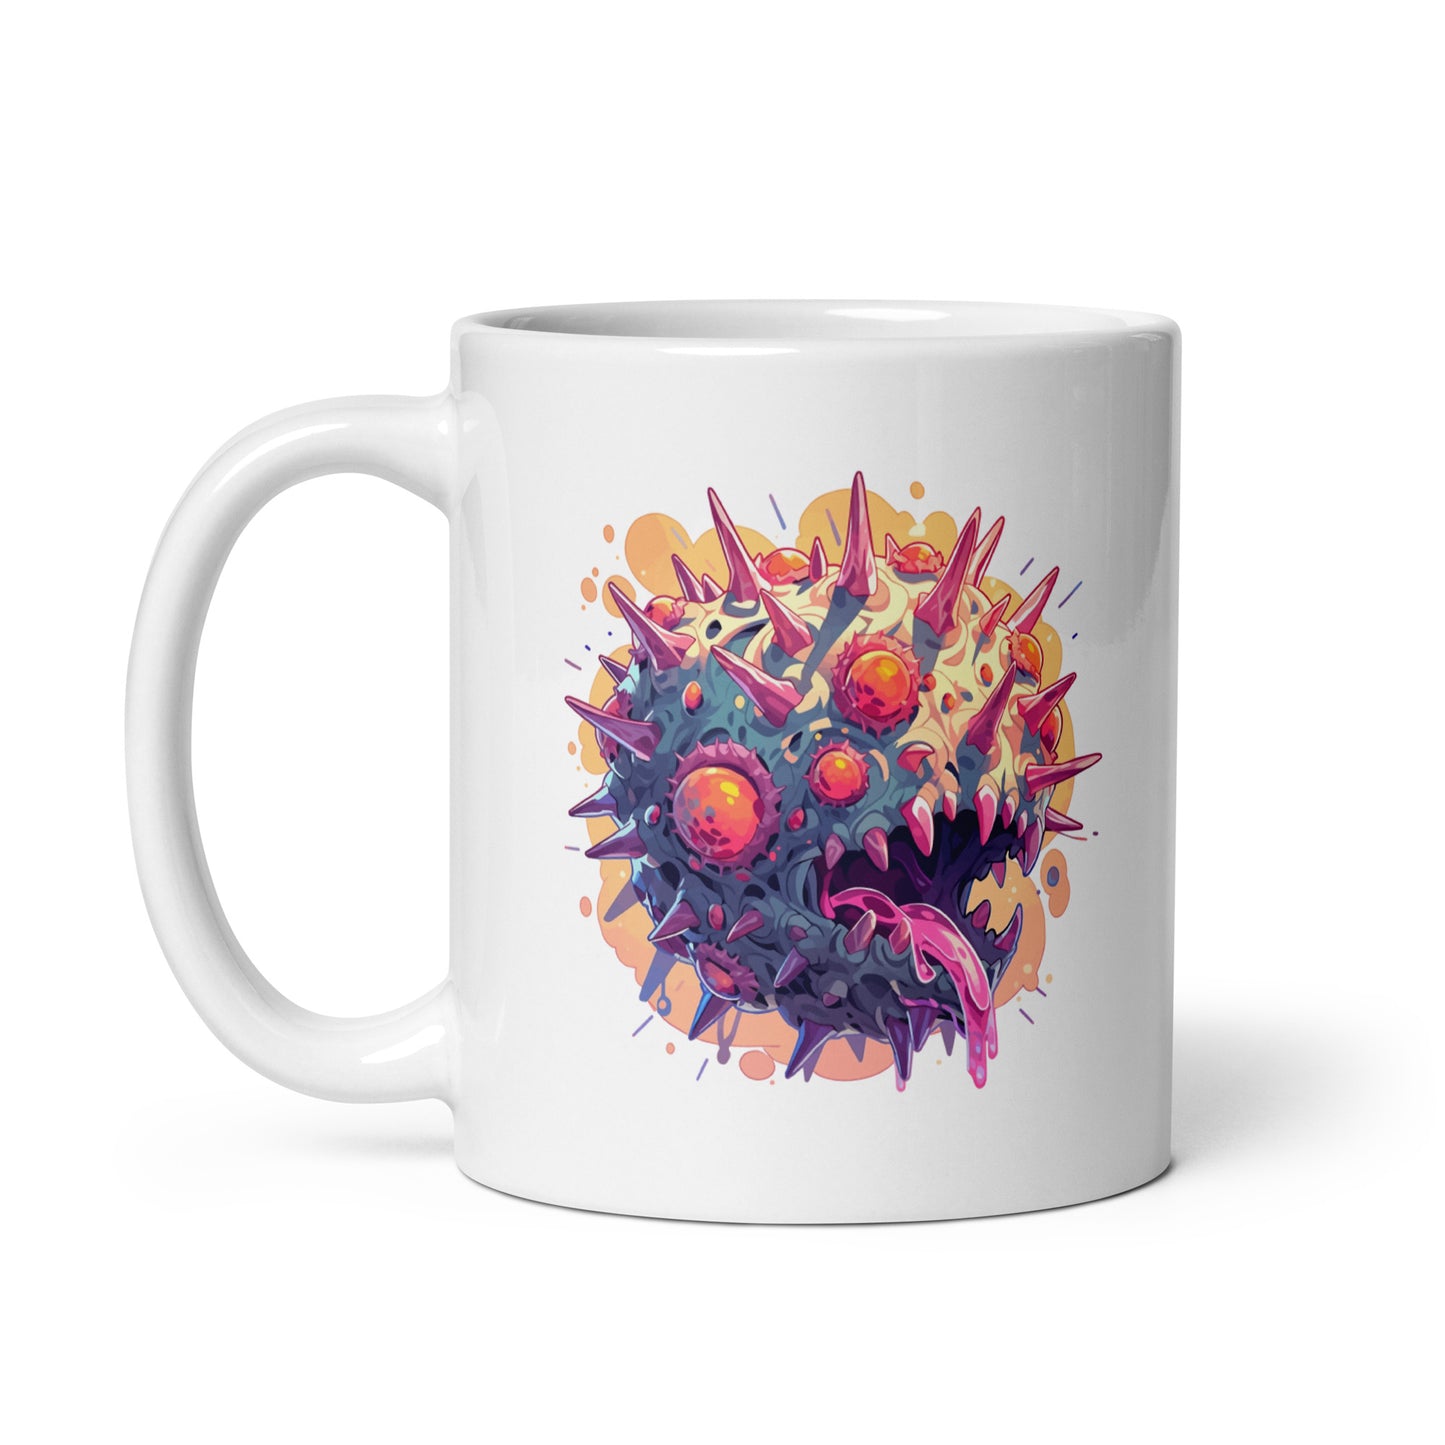 Orange evil eyes, Crazy illustration, Zombie virus with sharp horns and fangs - White glossy mug